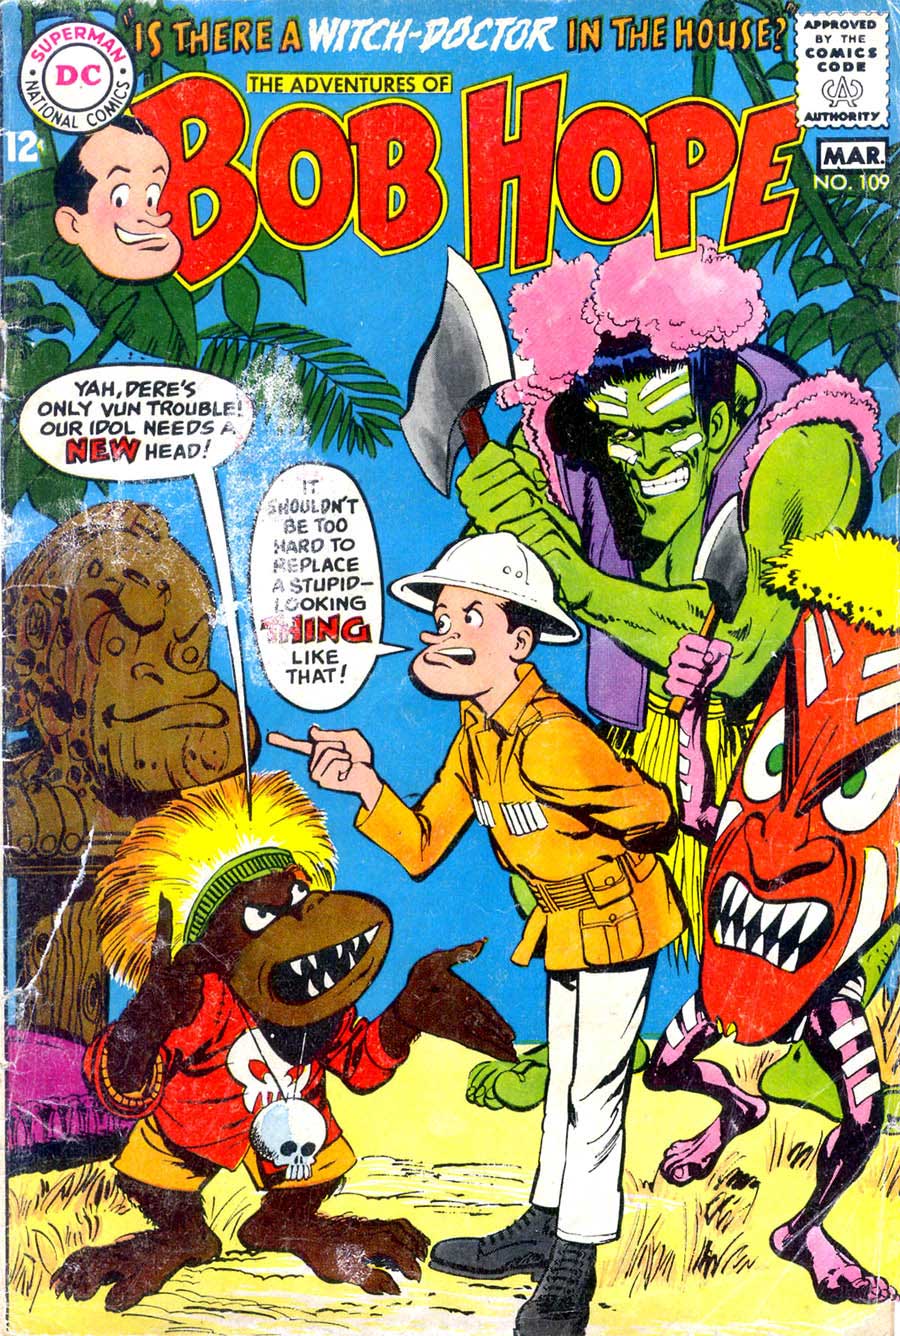 Adventures of Bob Hope v1 #109 - Neal Adams dc 1960s comic book cover art